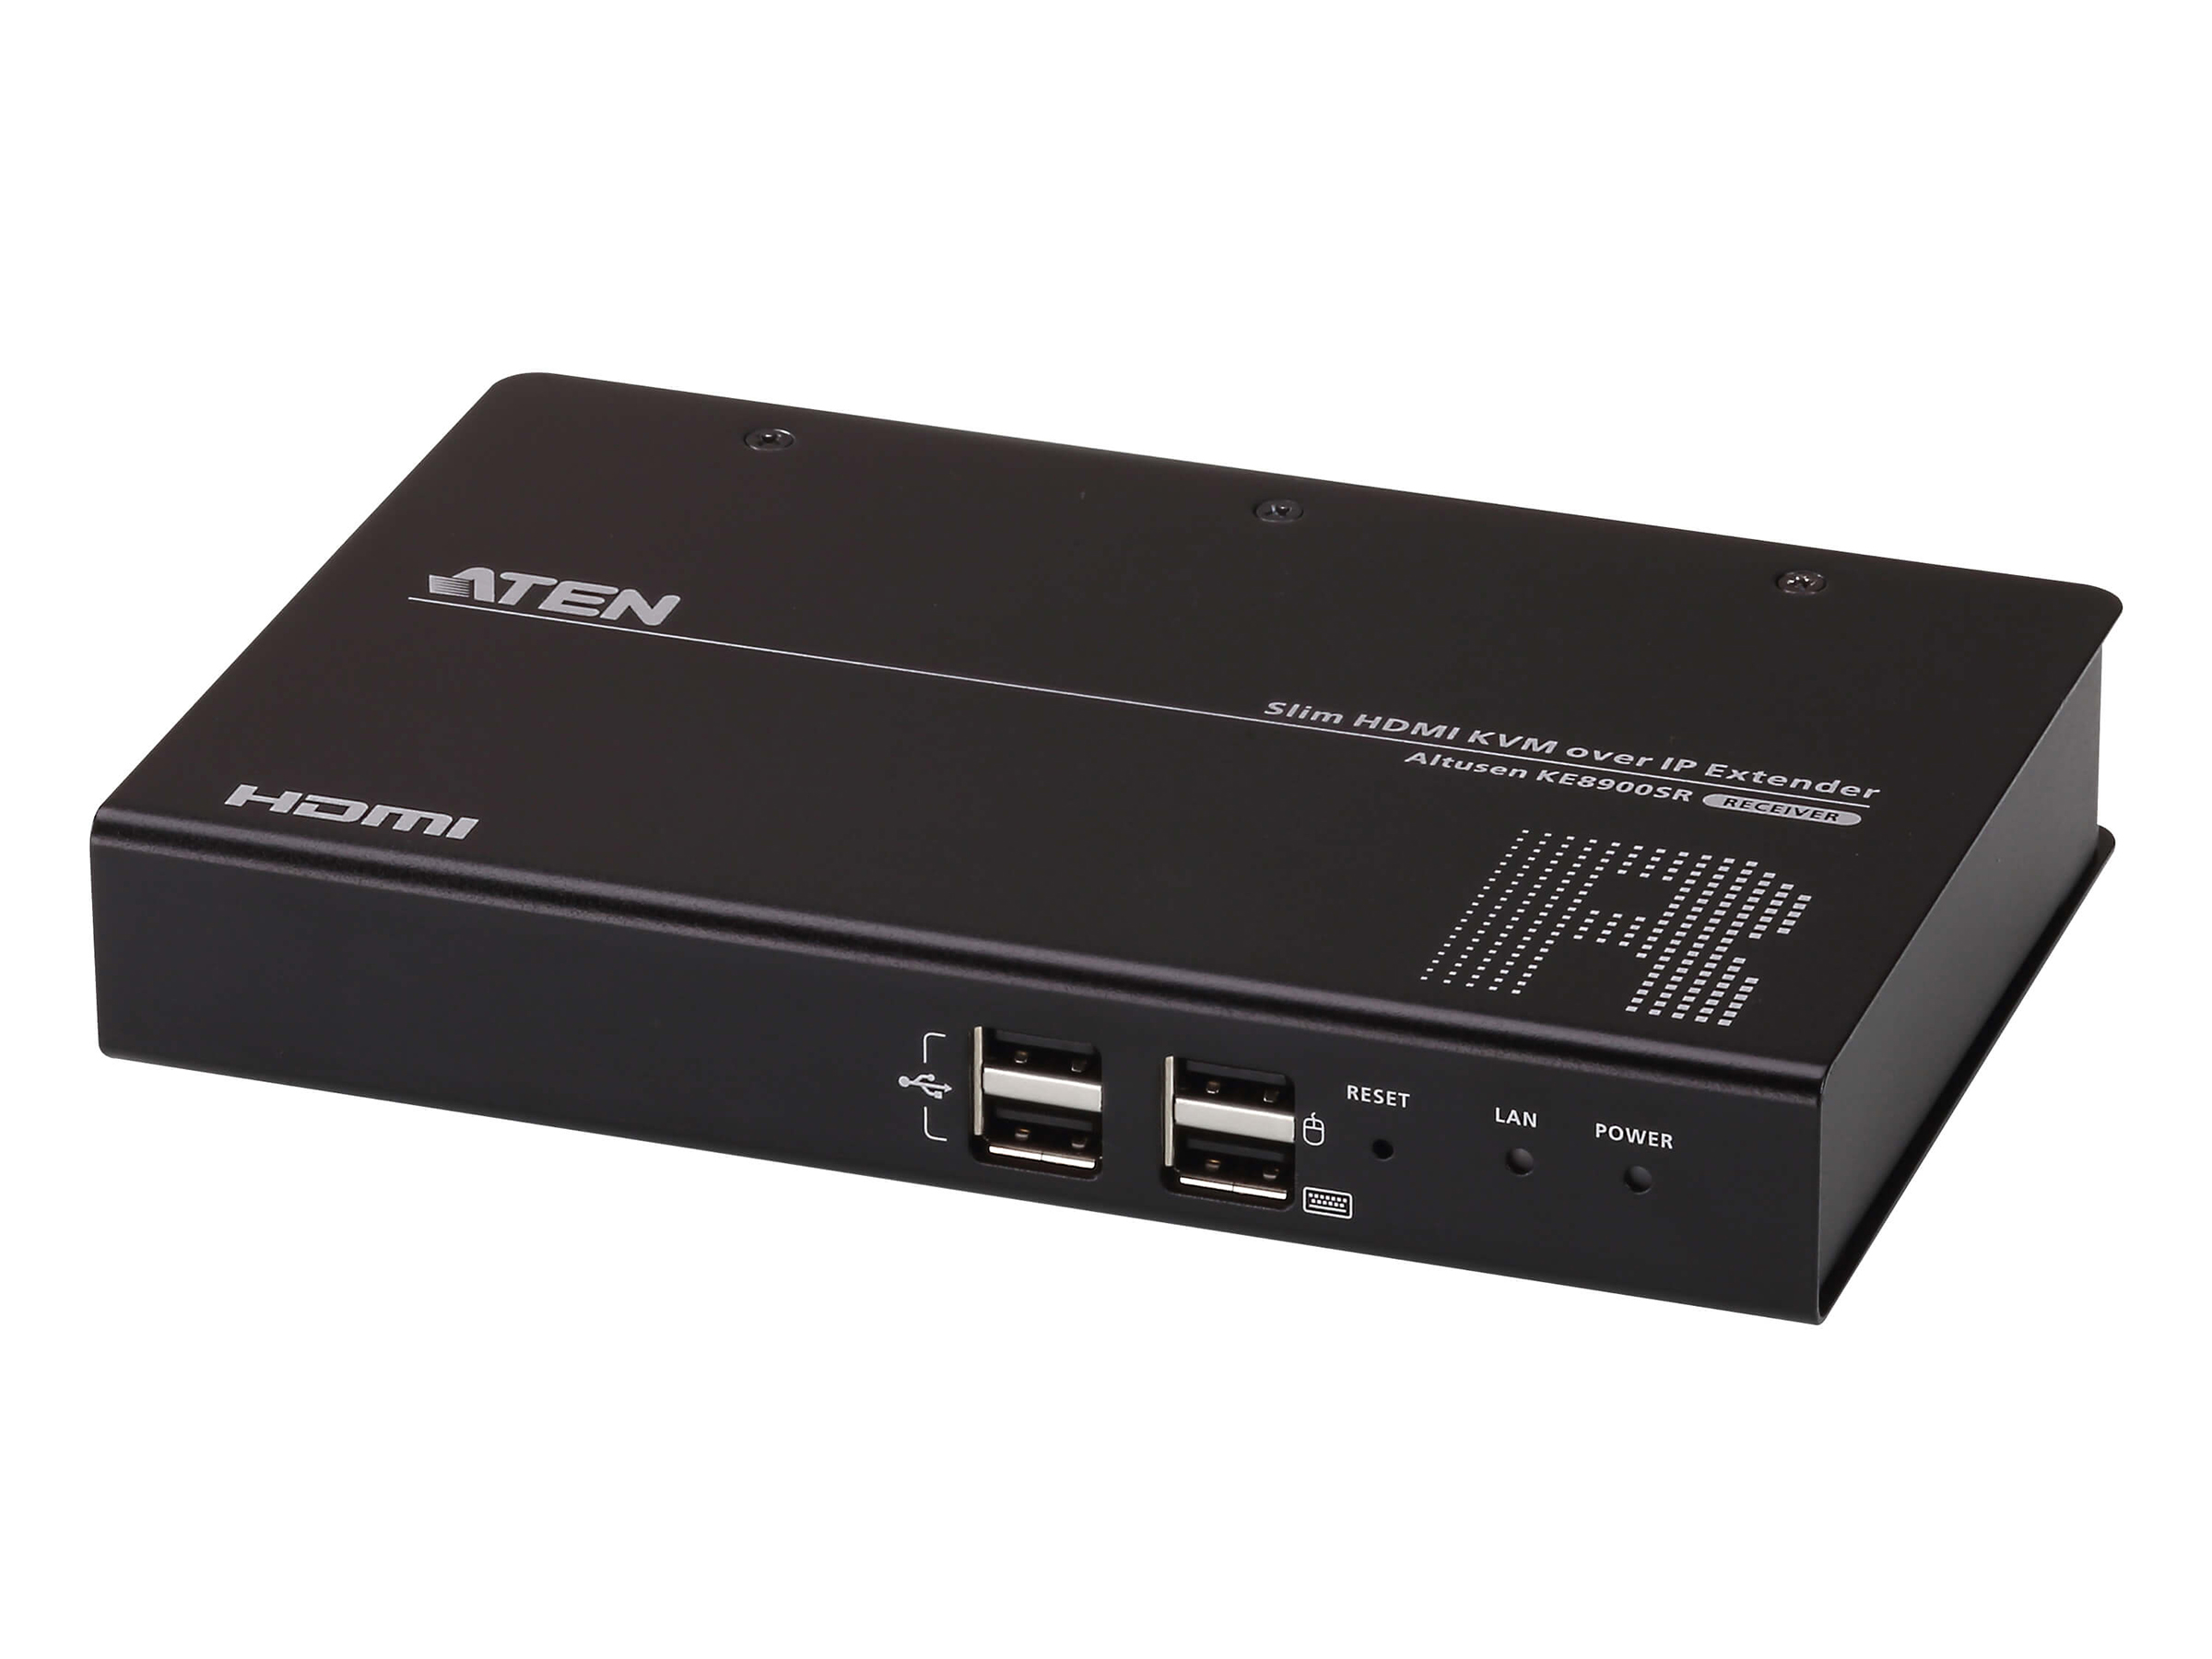 KE8900SR Slim HDMI Single Display KVM over IP Extender (Receiver) by Aten